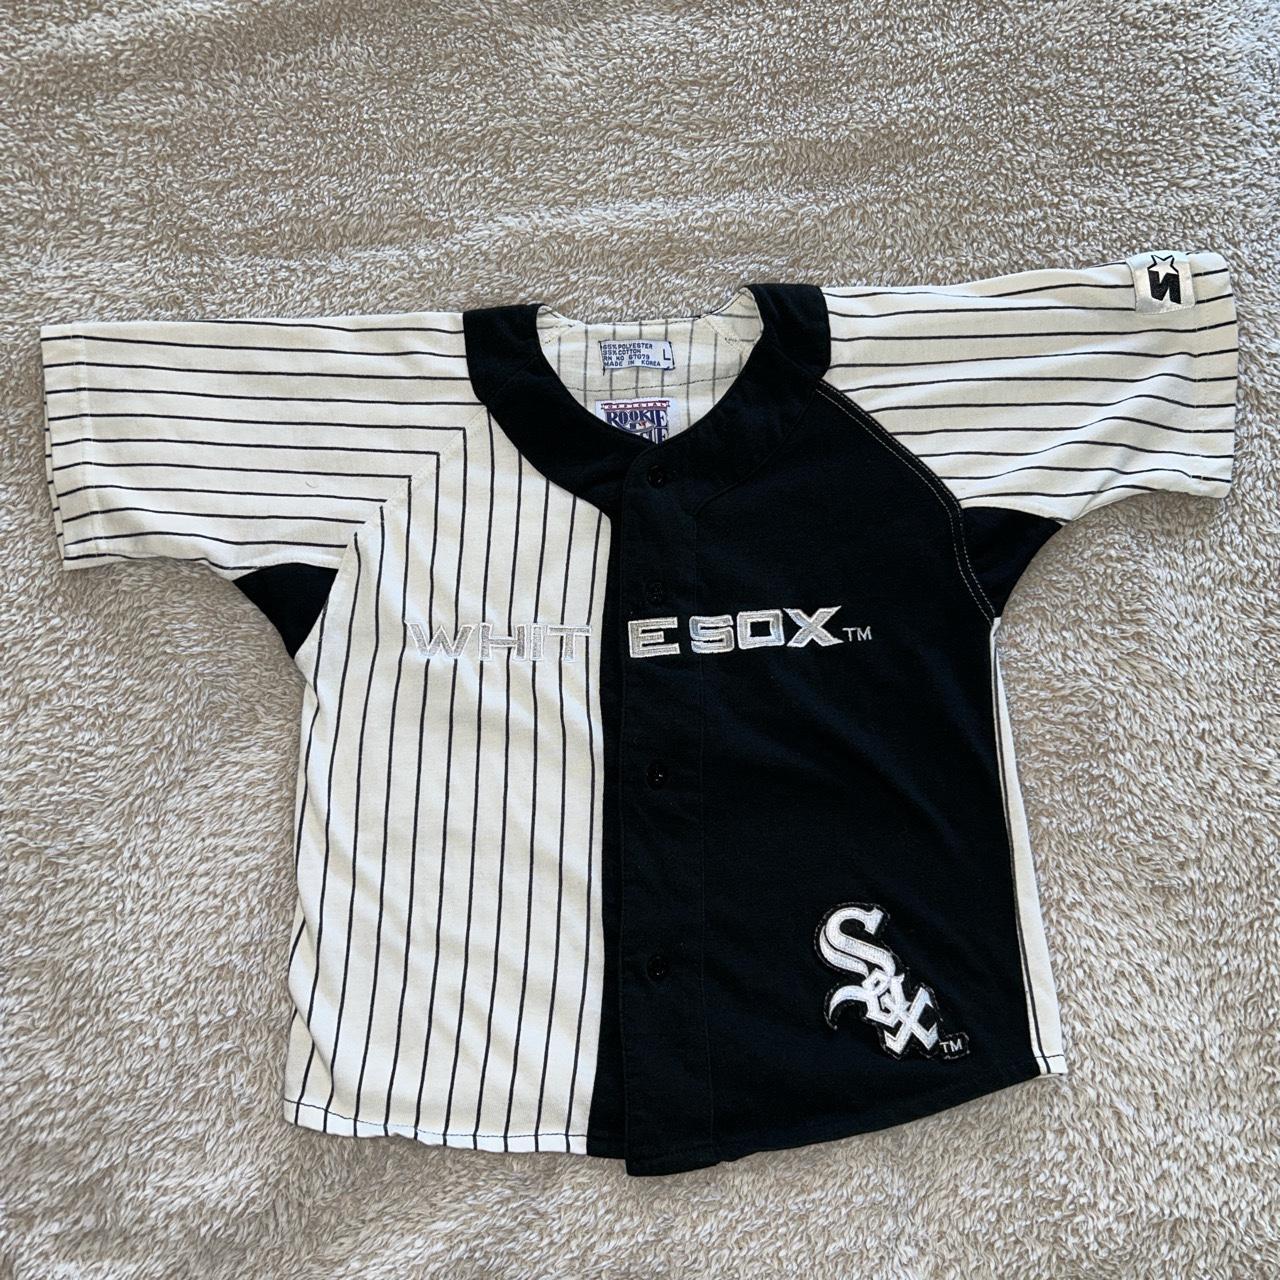 Starter X White Sox - Tops & T-shirts, T-shirts